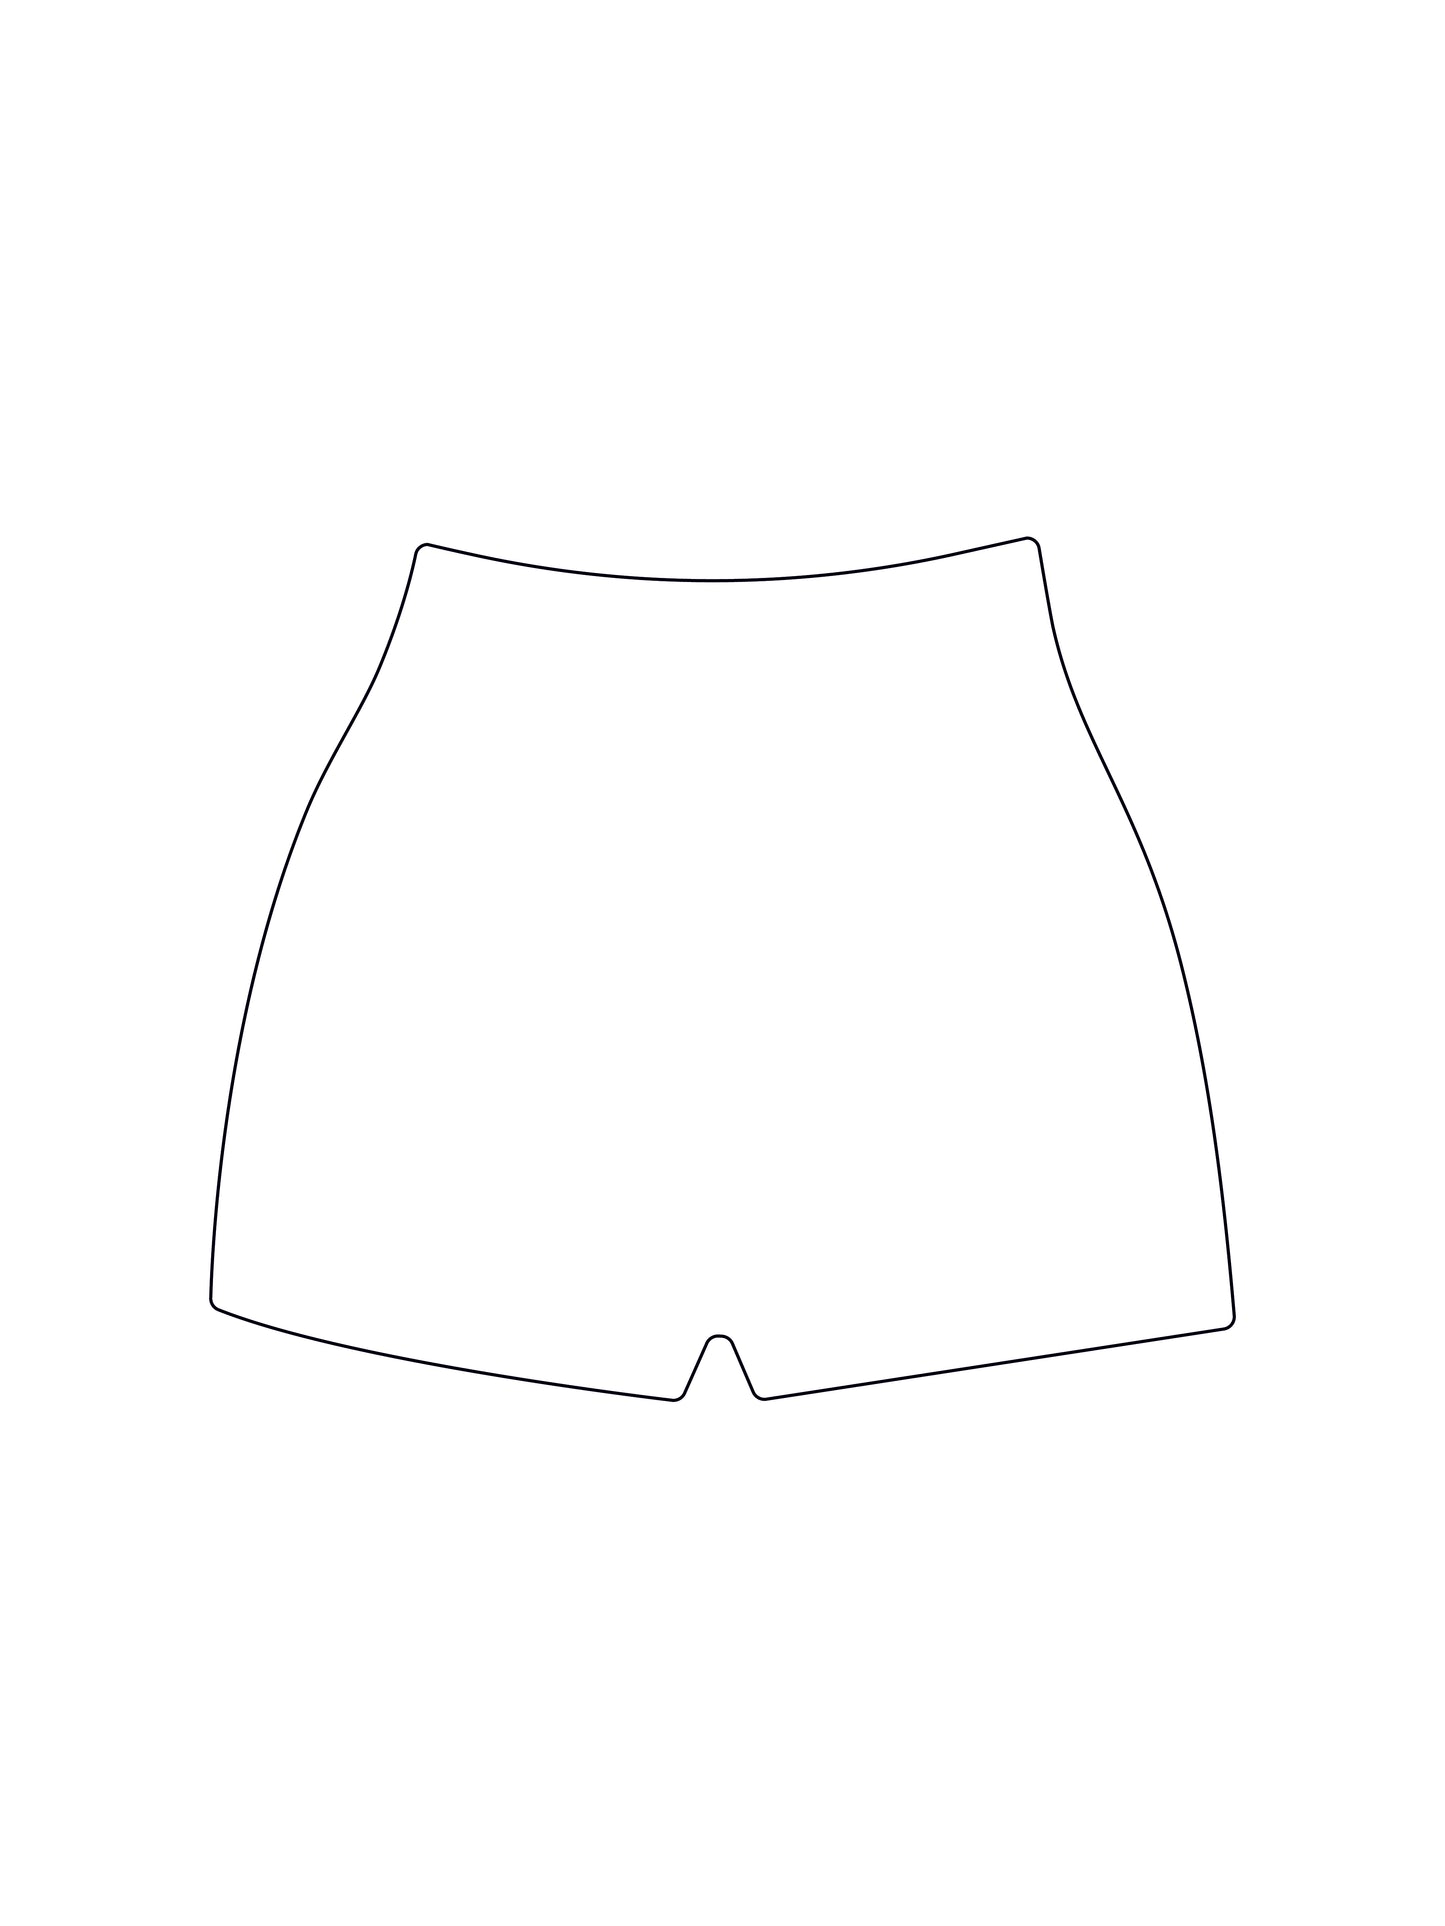 Custom heart diamante short shorts